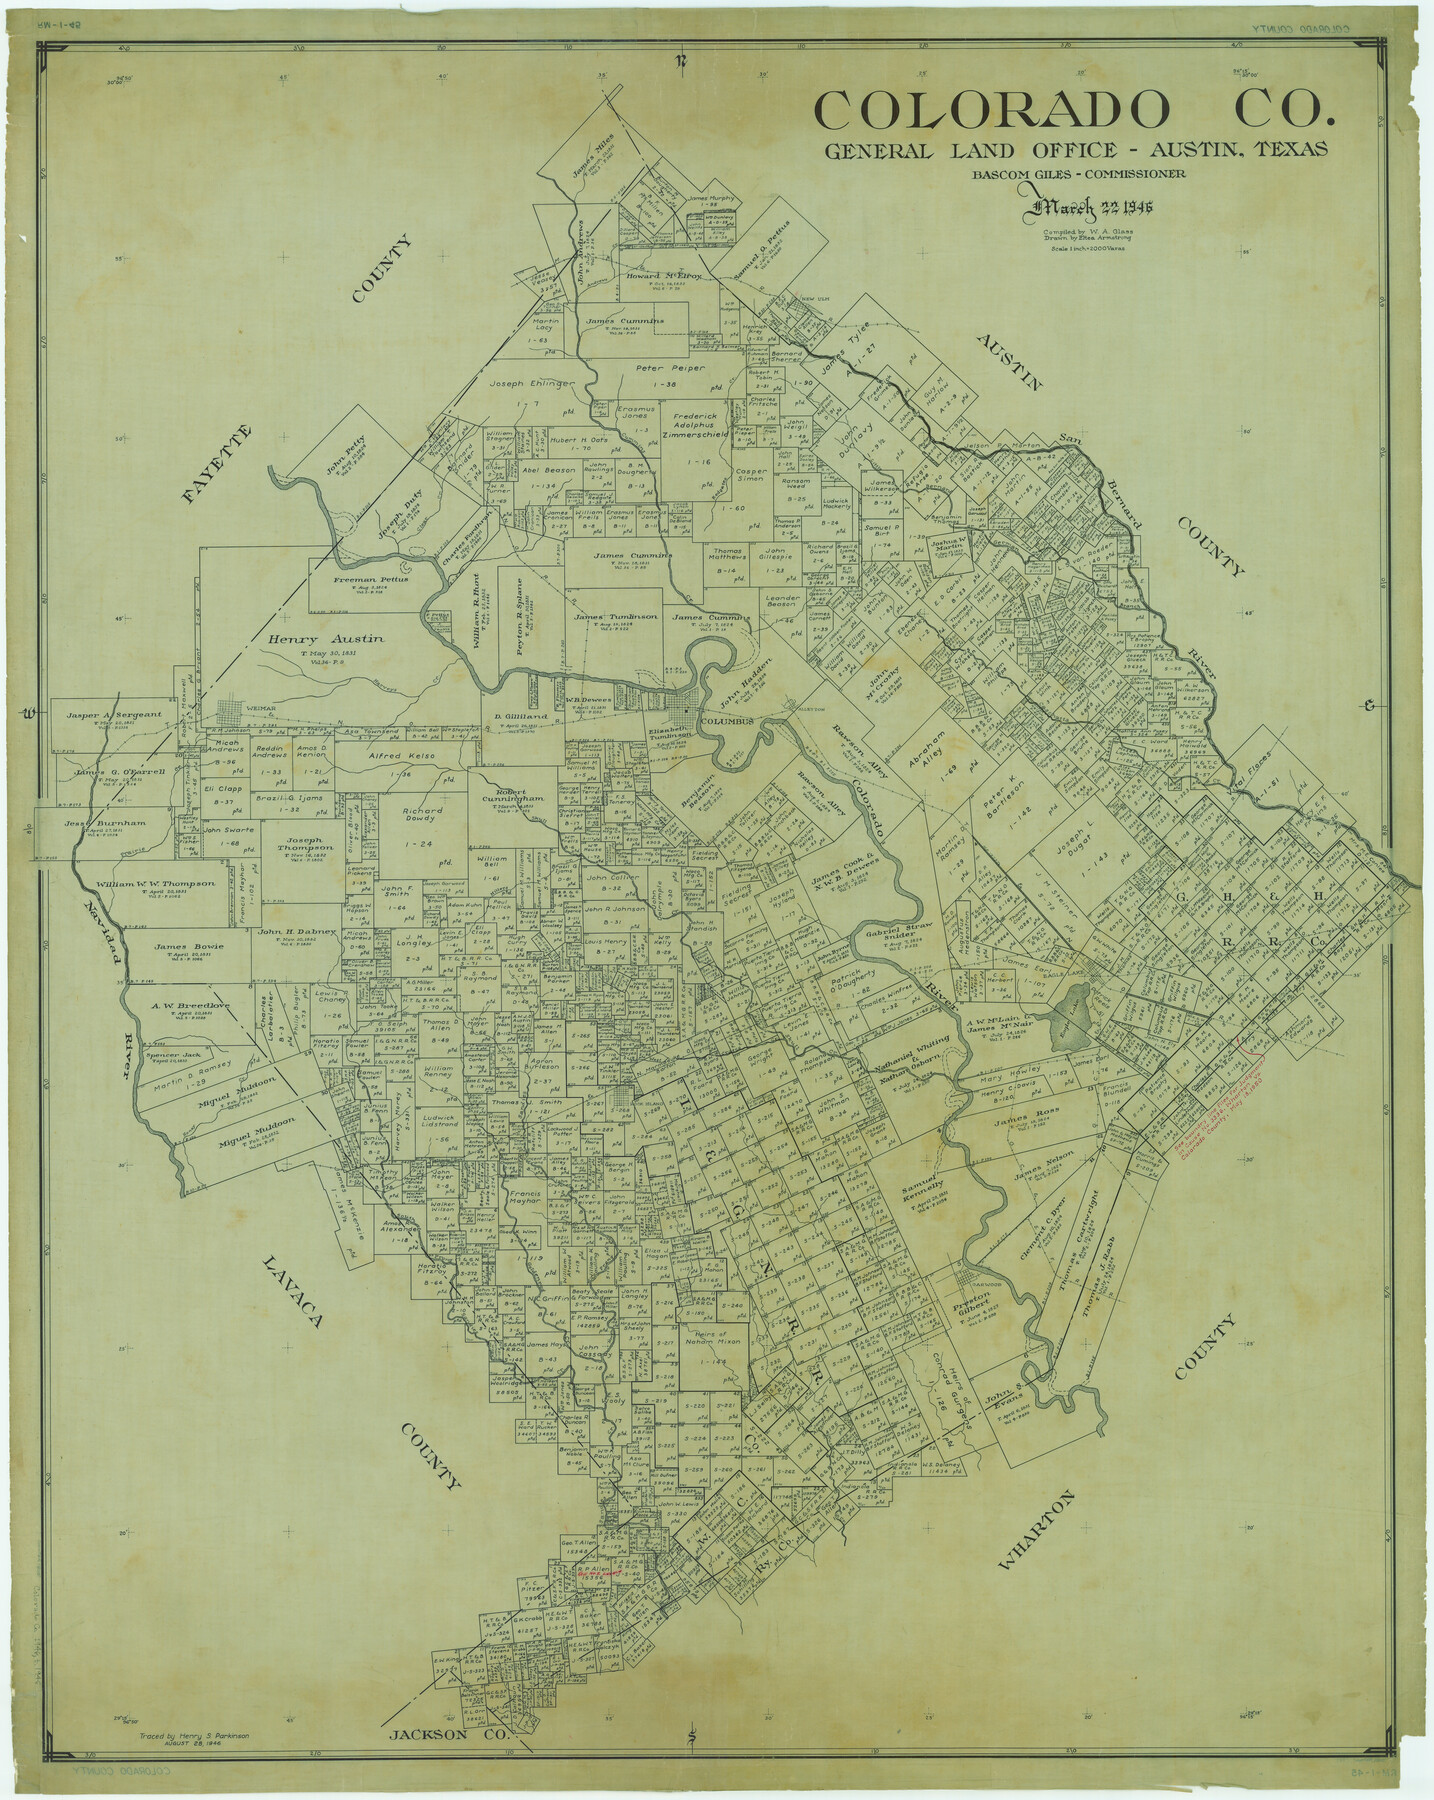 1805, Colorado Co., General Map Collection